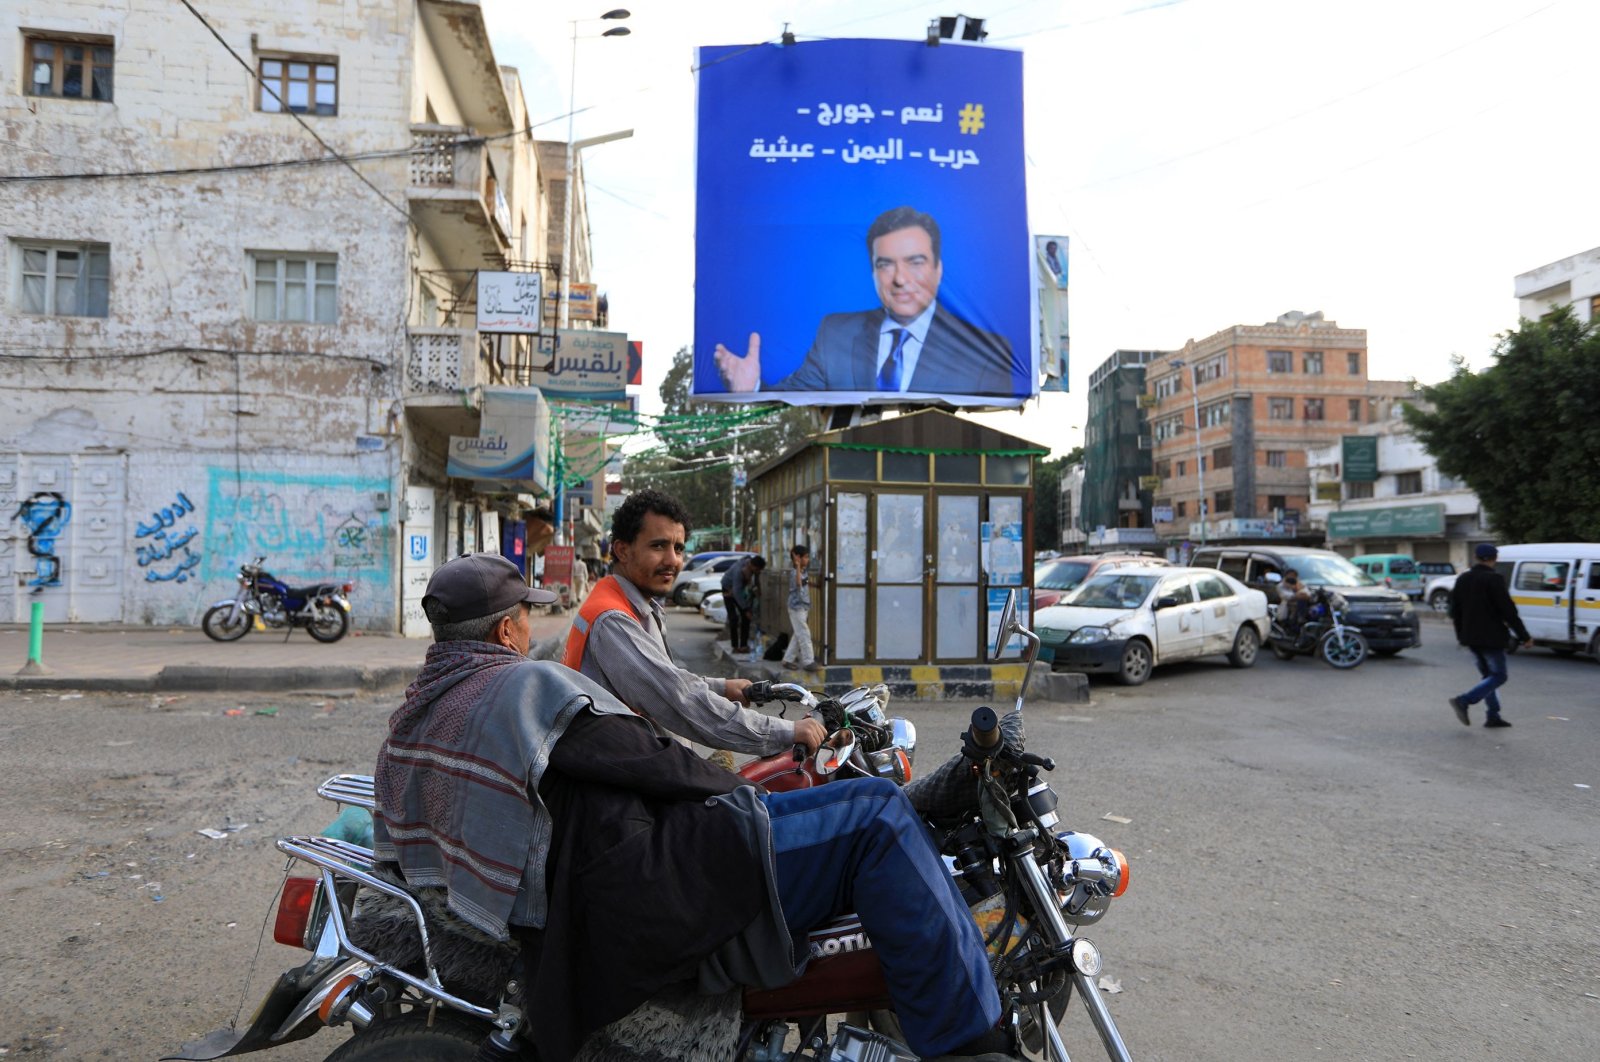 A portrait of Lebanese Information Minister George Kordahi is displayed on a billboard in Sanaa, Yemen, Oct. 31, 2021. (AFP Photo)